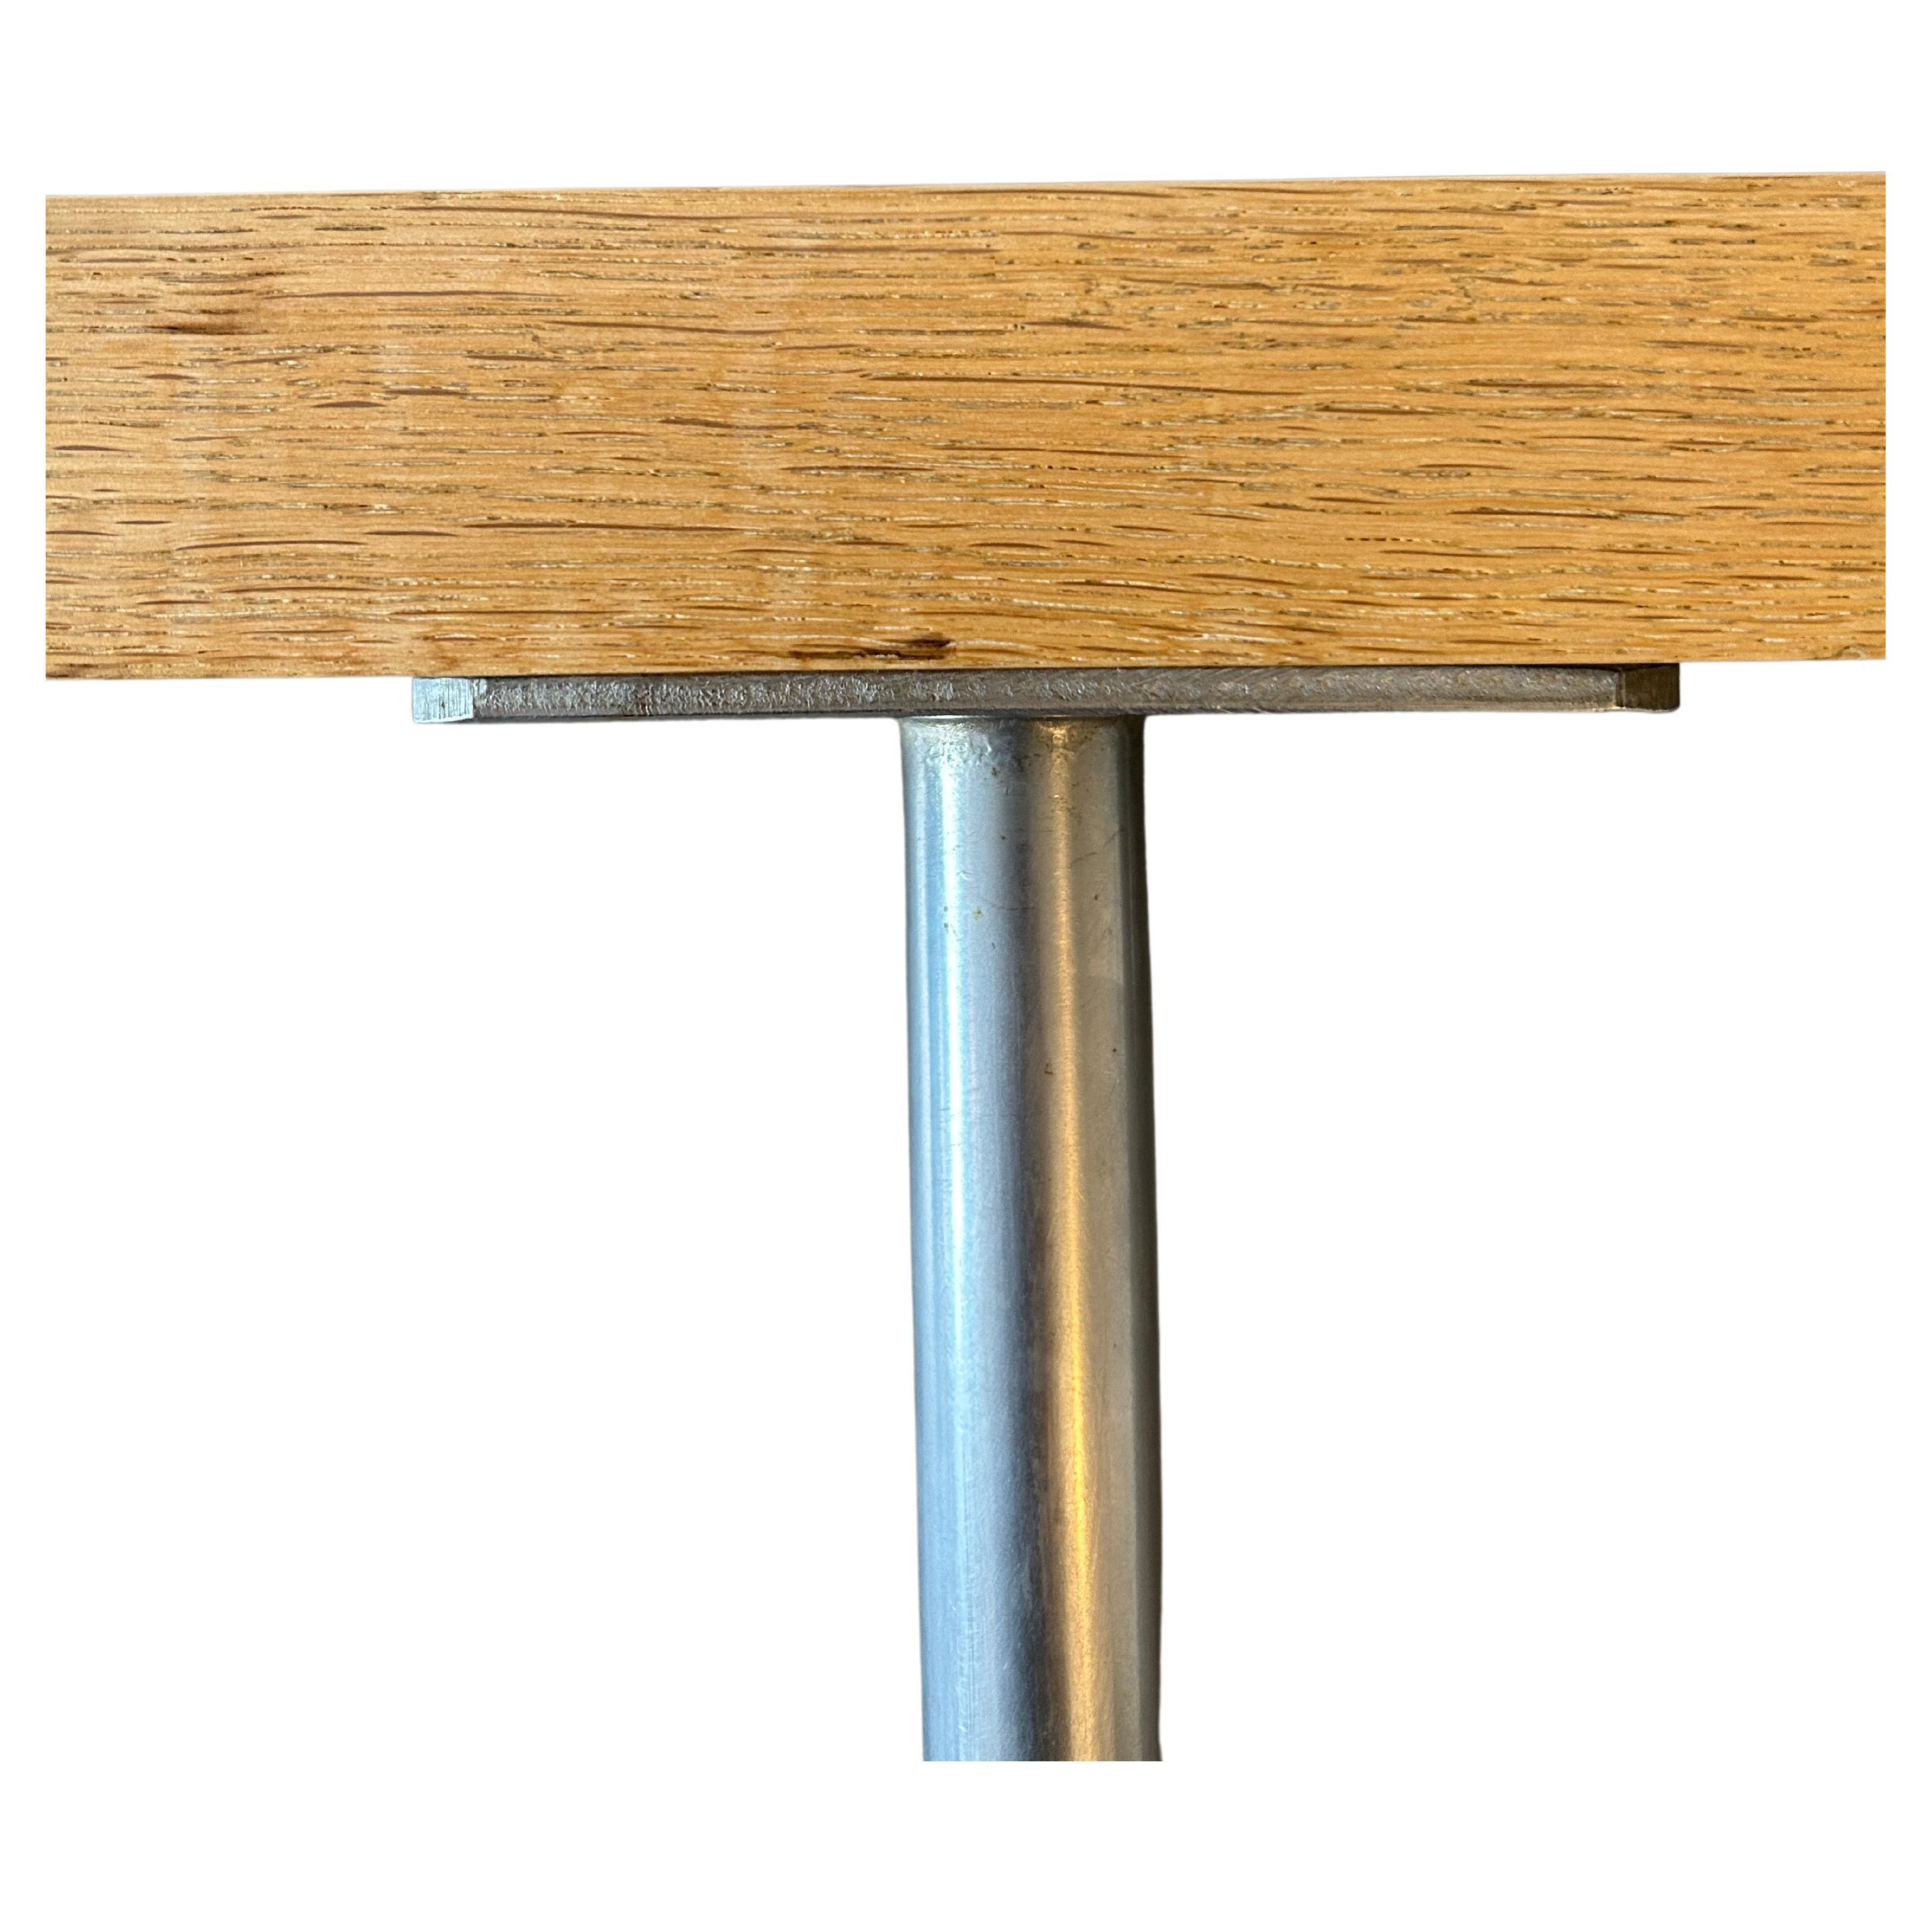 Woodwork Mid Century Danish Modern Solid White Oak Coffee Table Metal Legs For Sale